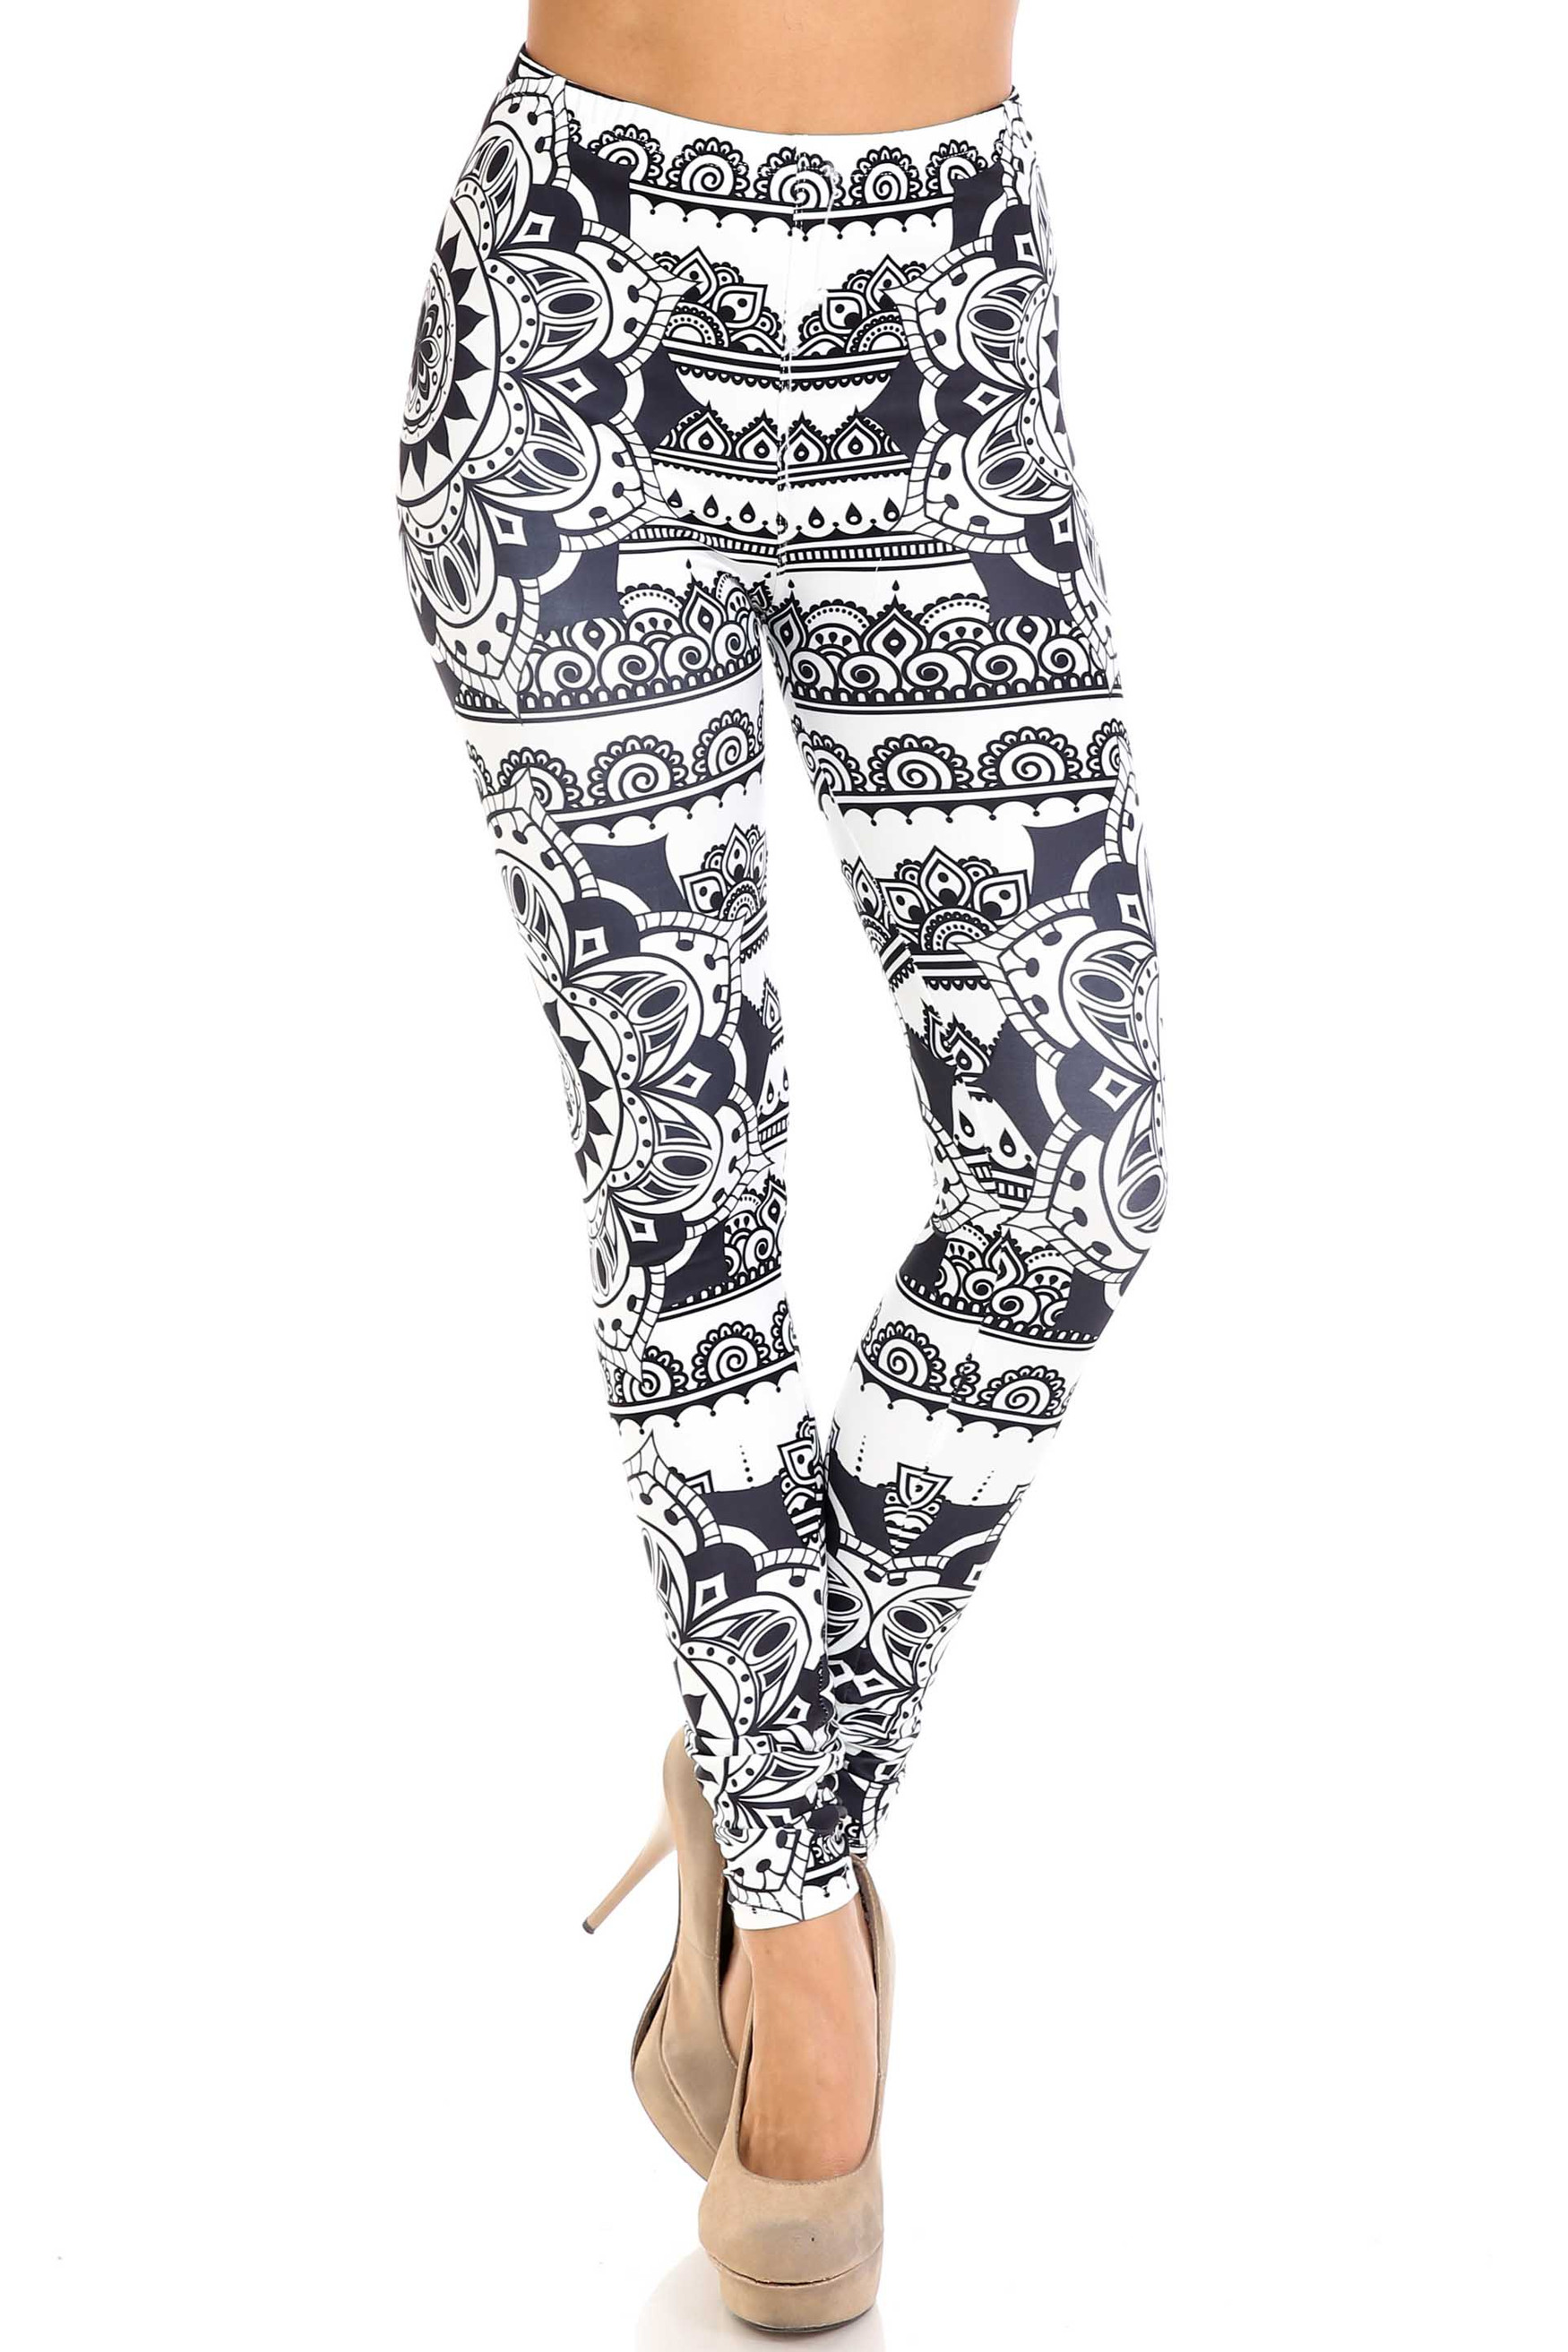 Creamy Soft Monochrome Mandala Leggings - By USA Fashion™